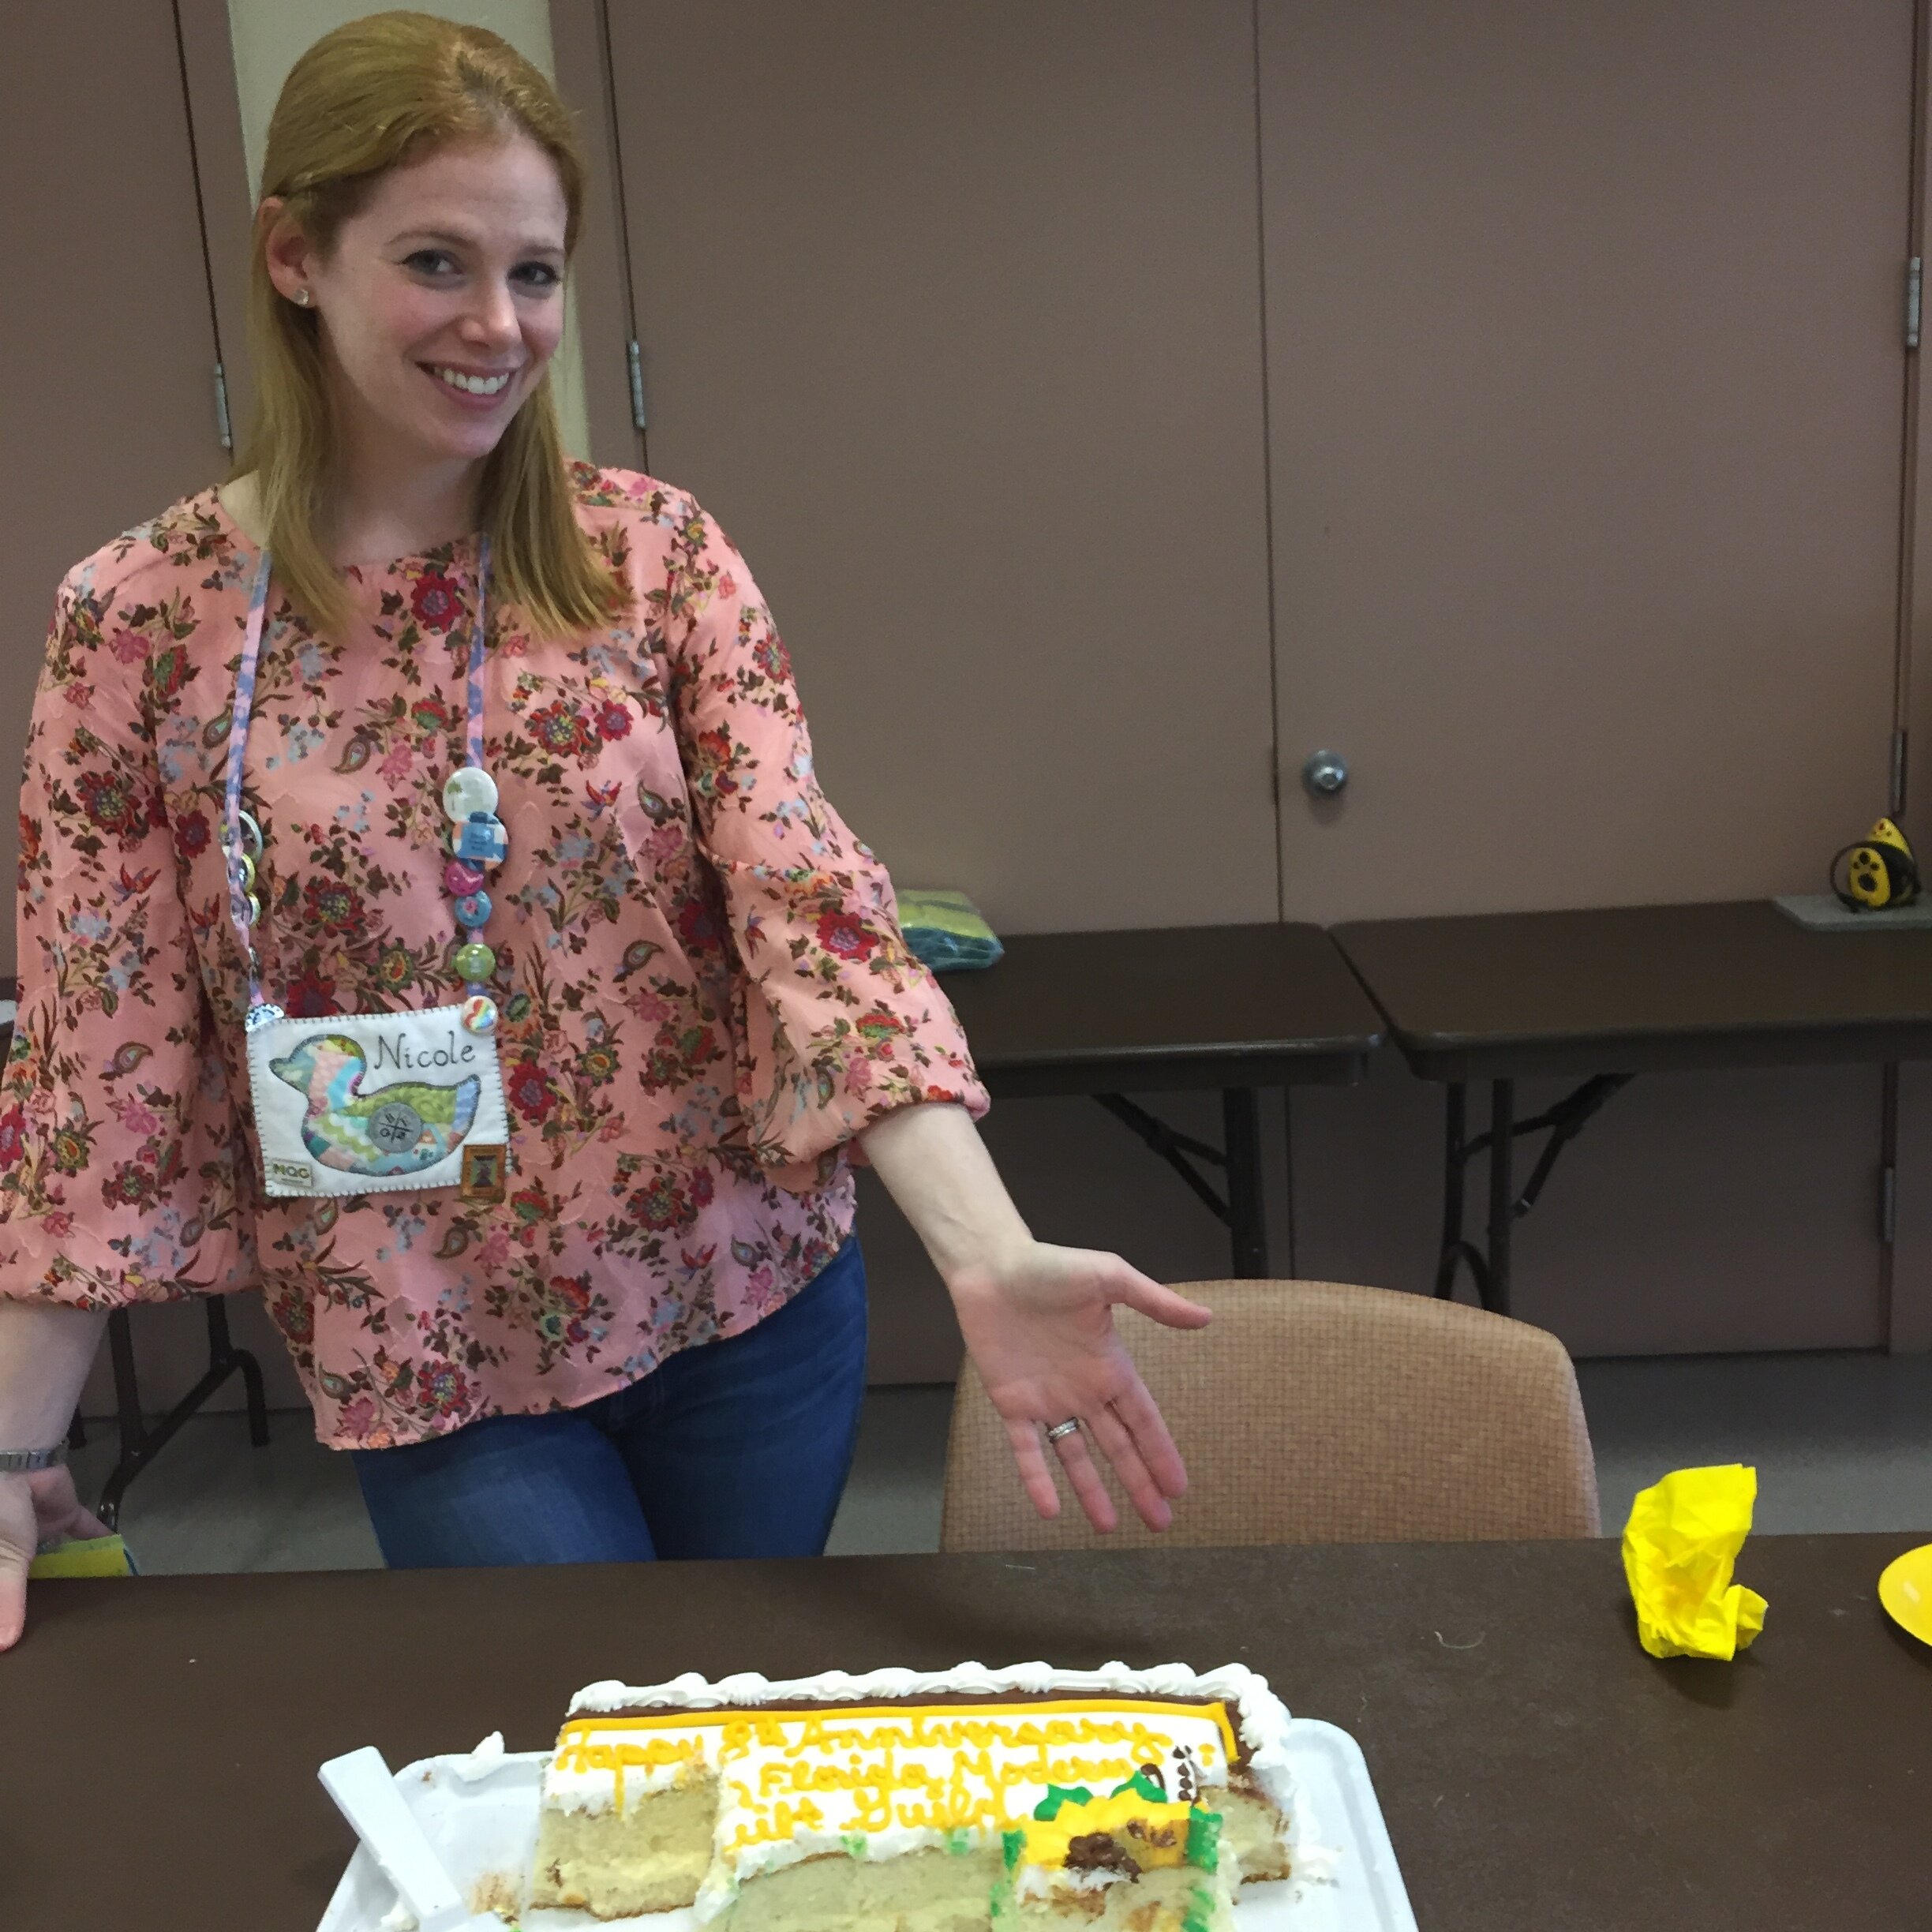 Yummy Cake - thanks Nicole!